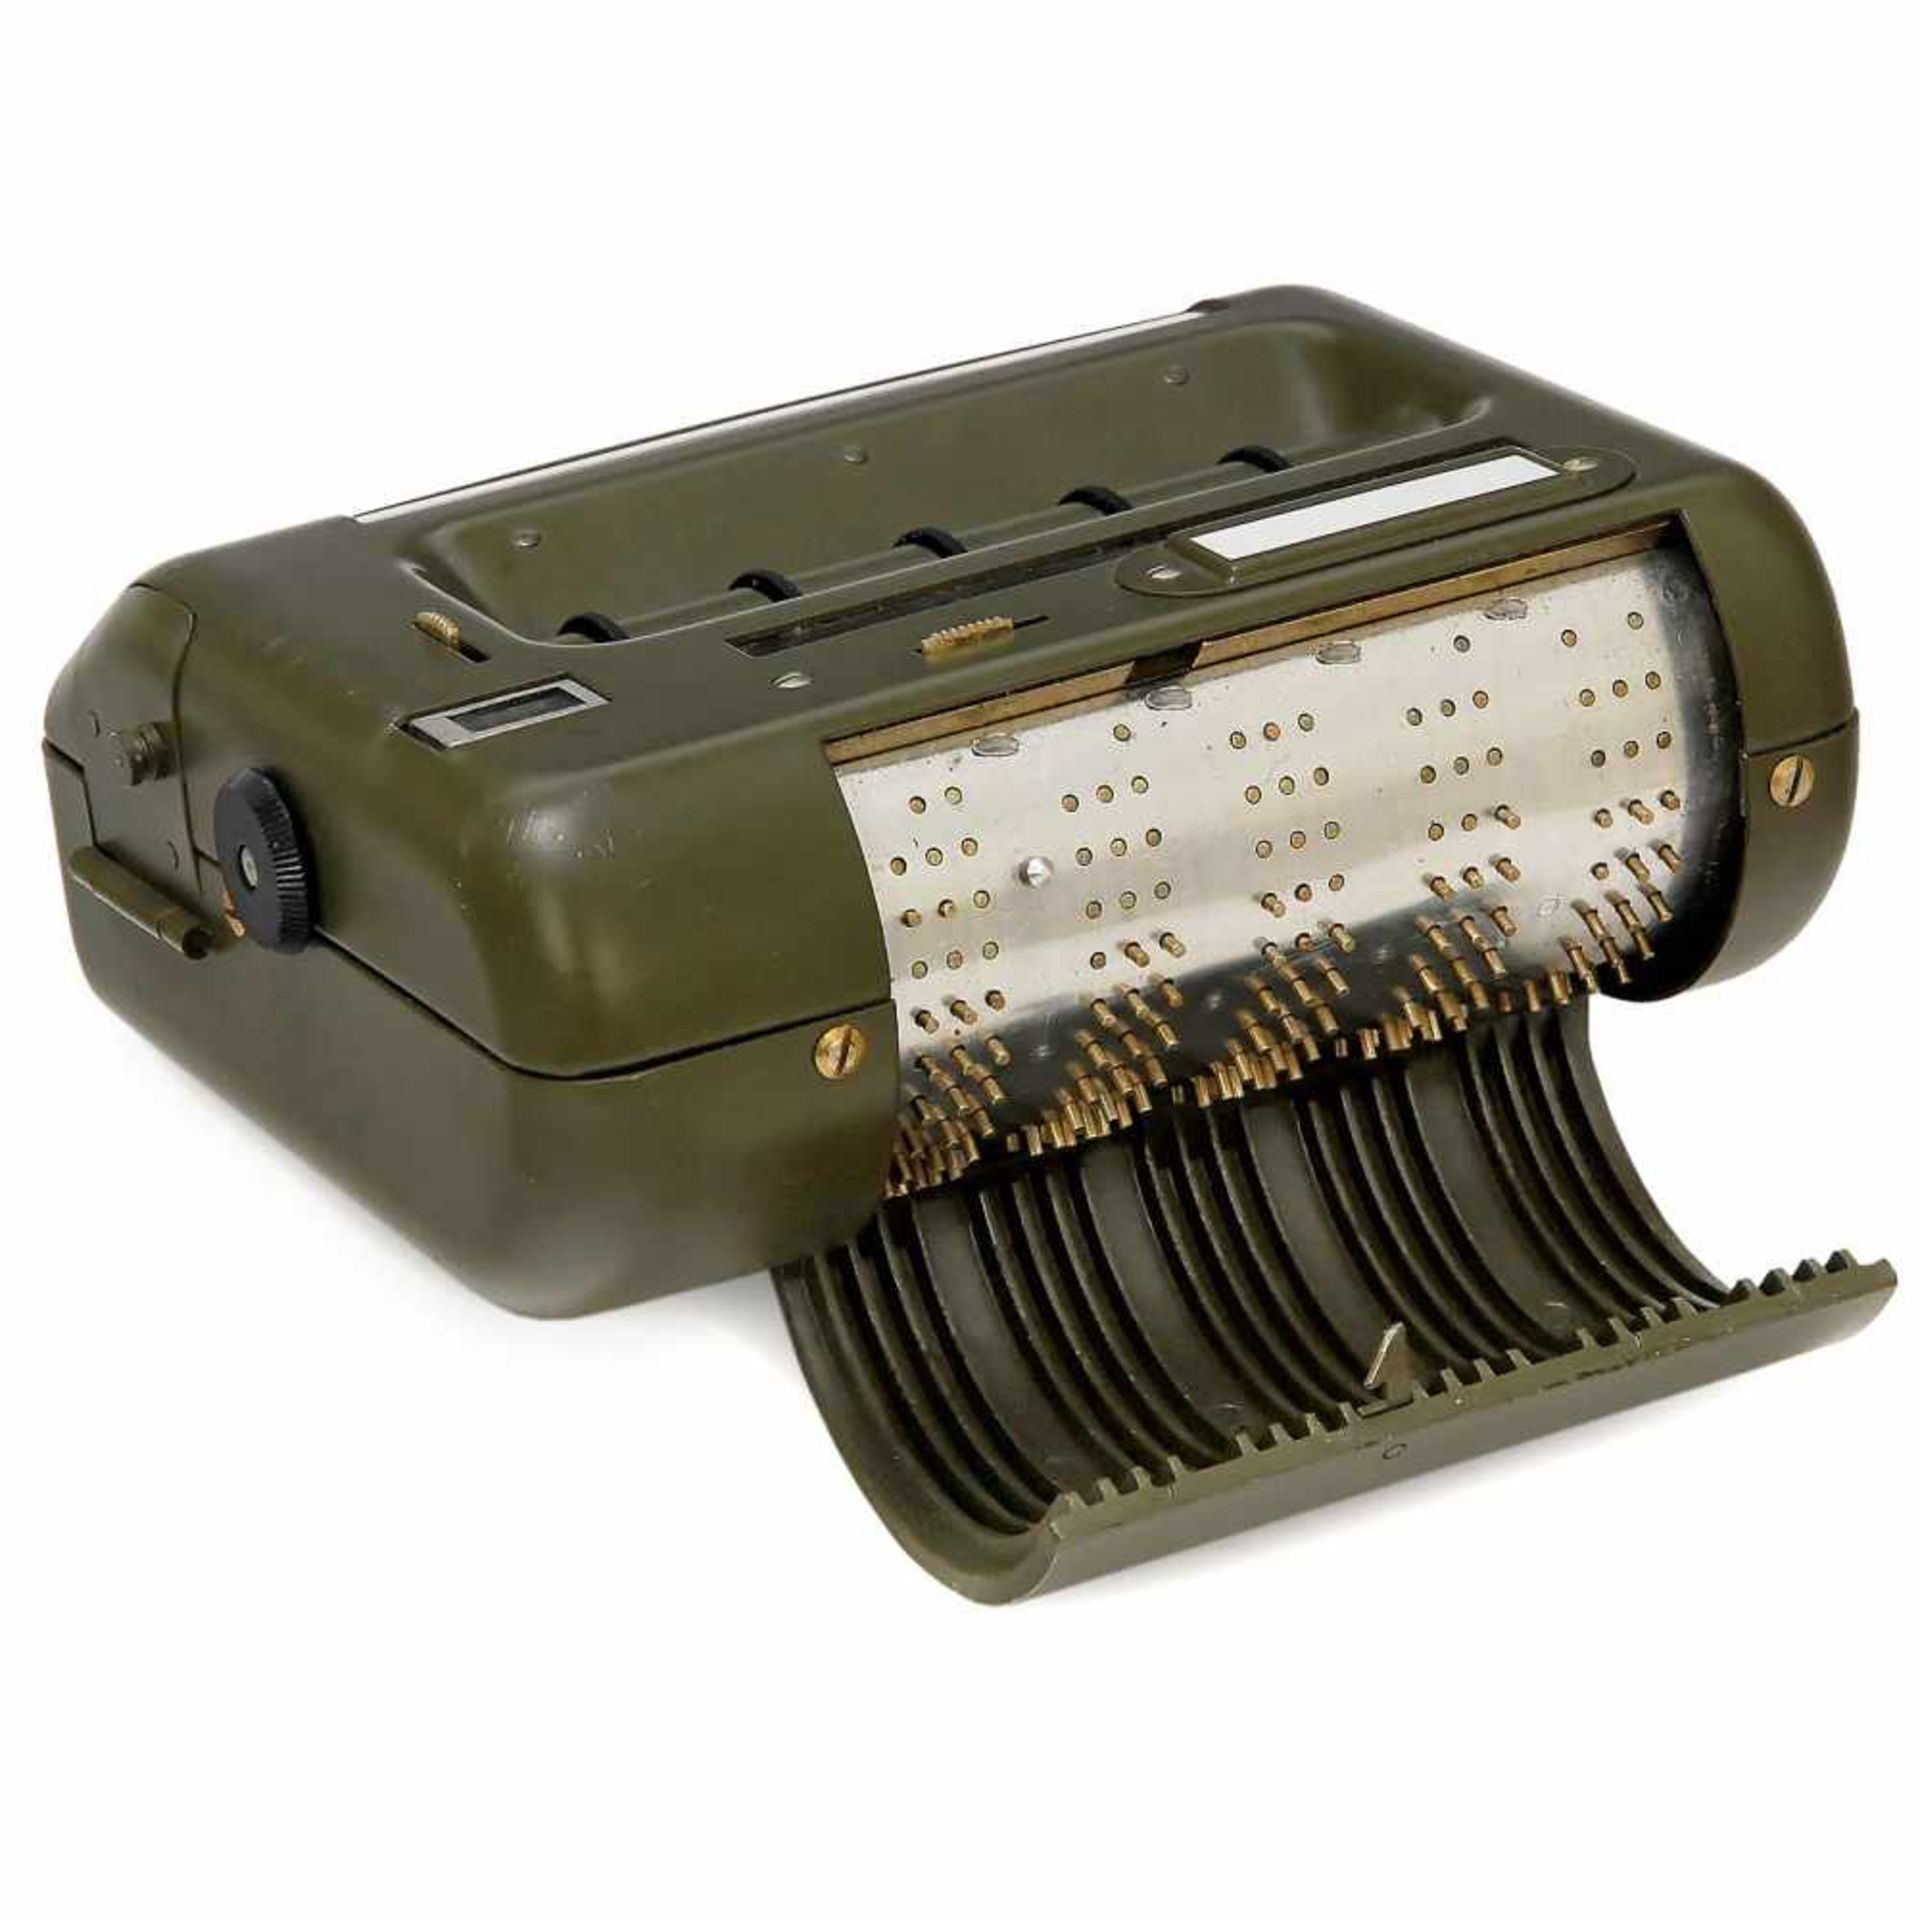 Transvertex HC-9 (KRYAPP 301) Cypher Machine, c. 1955Manufactured by AB Transvertex, Stockholm. Used - Bild 2 aus 2